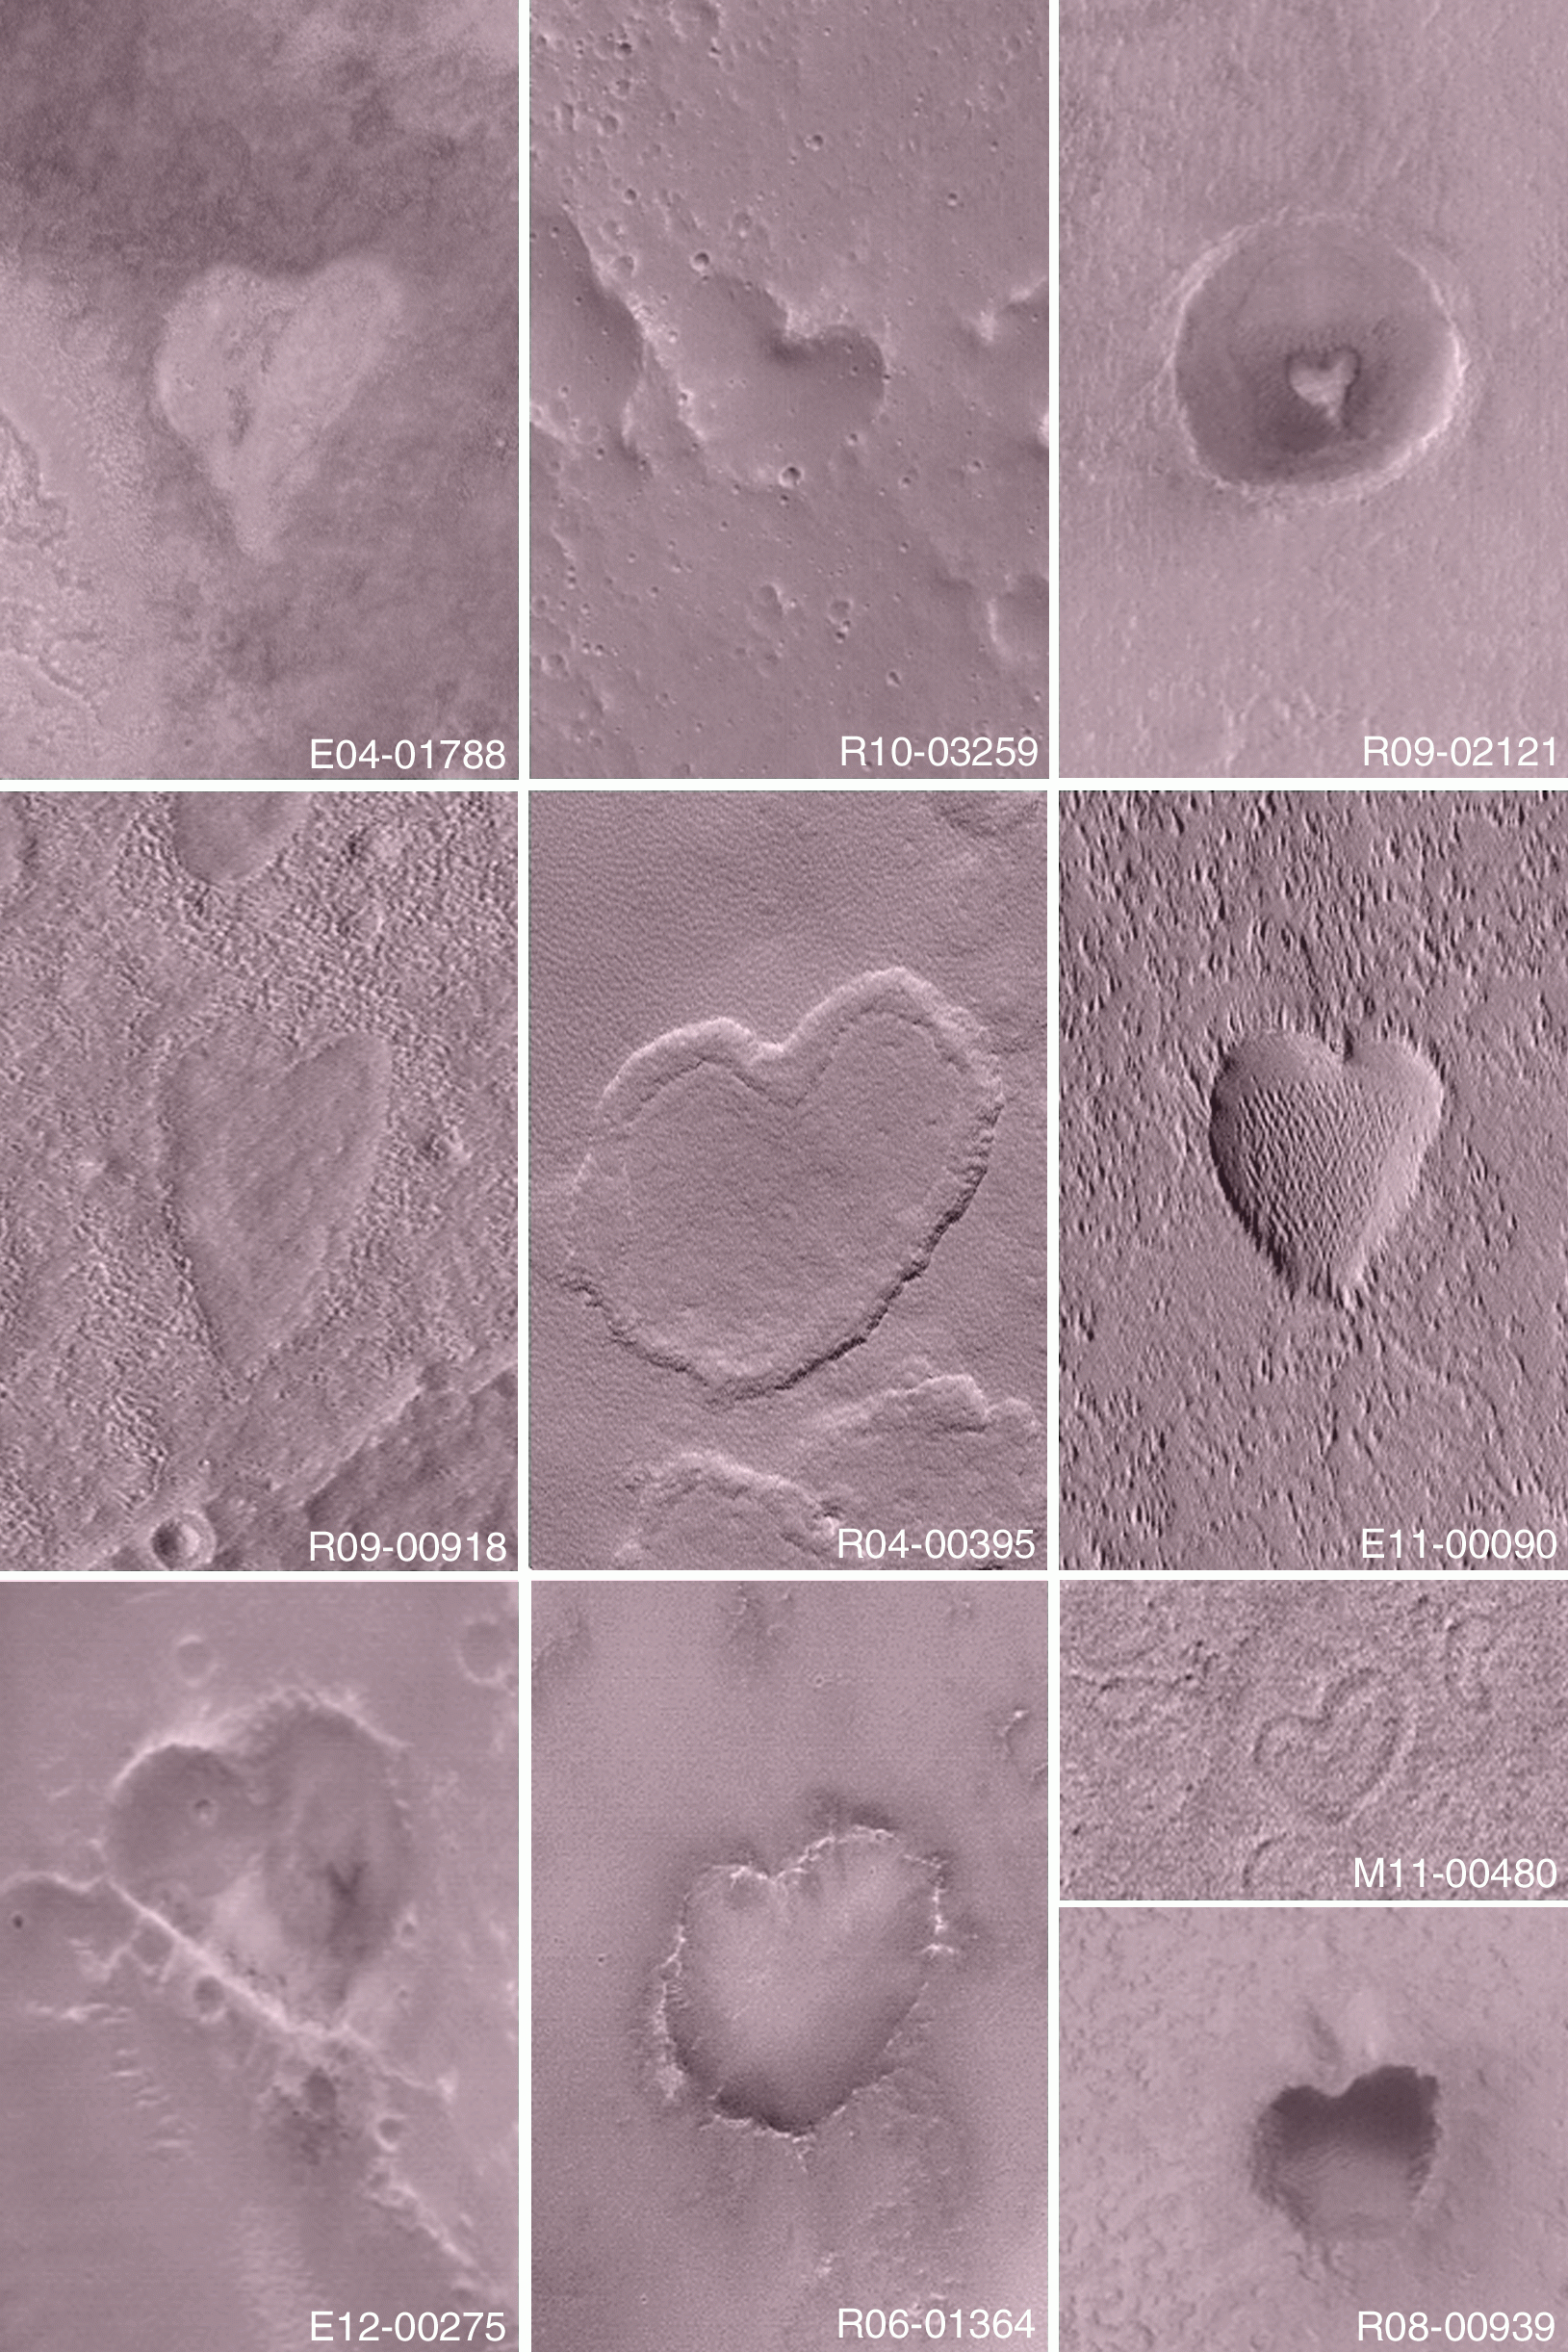 Hearts on Mars